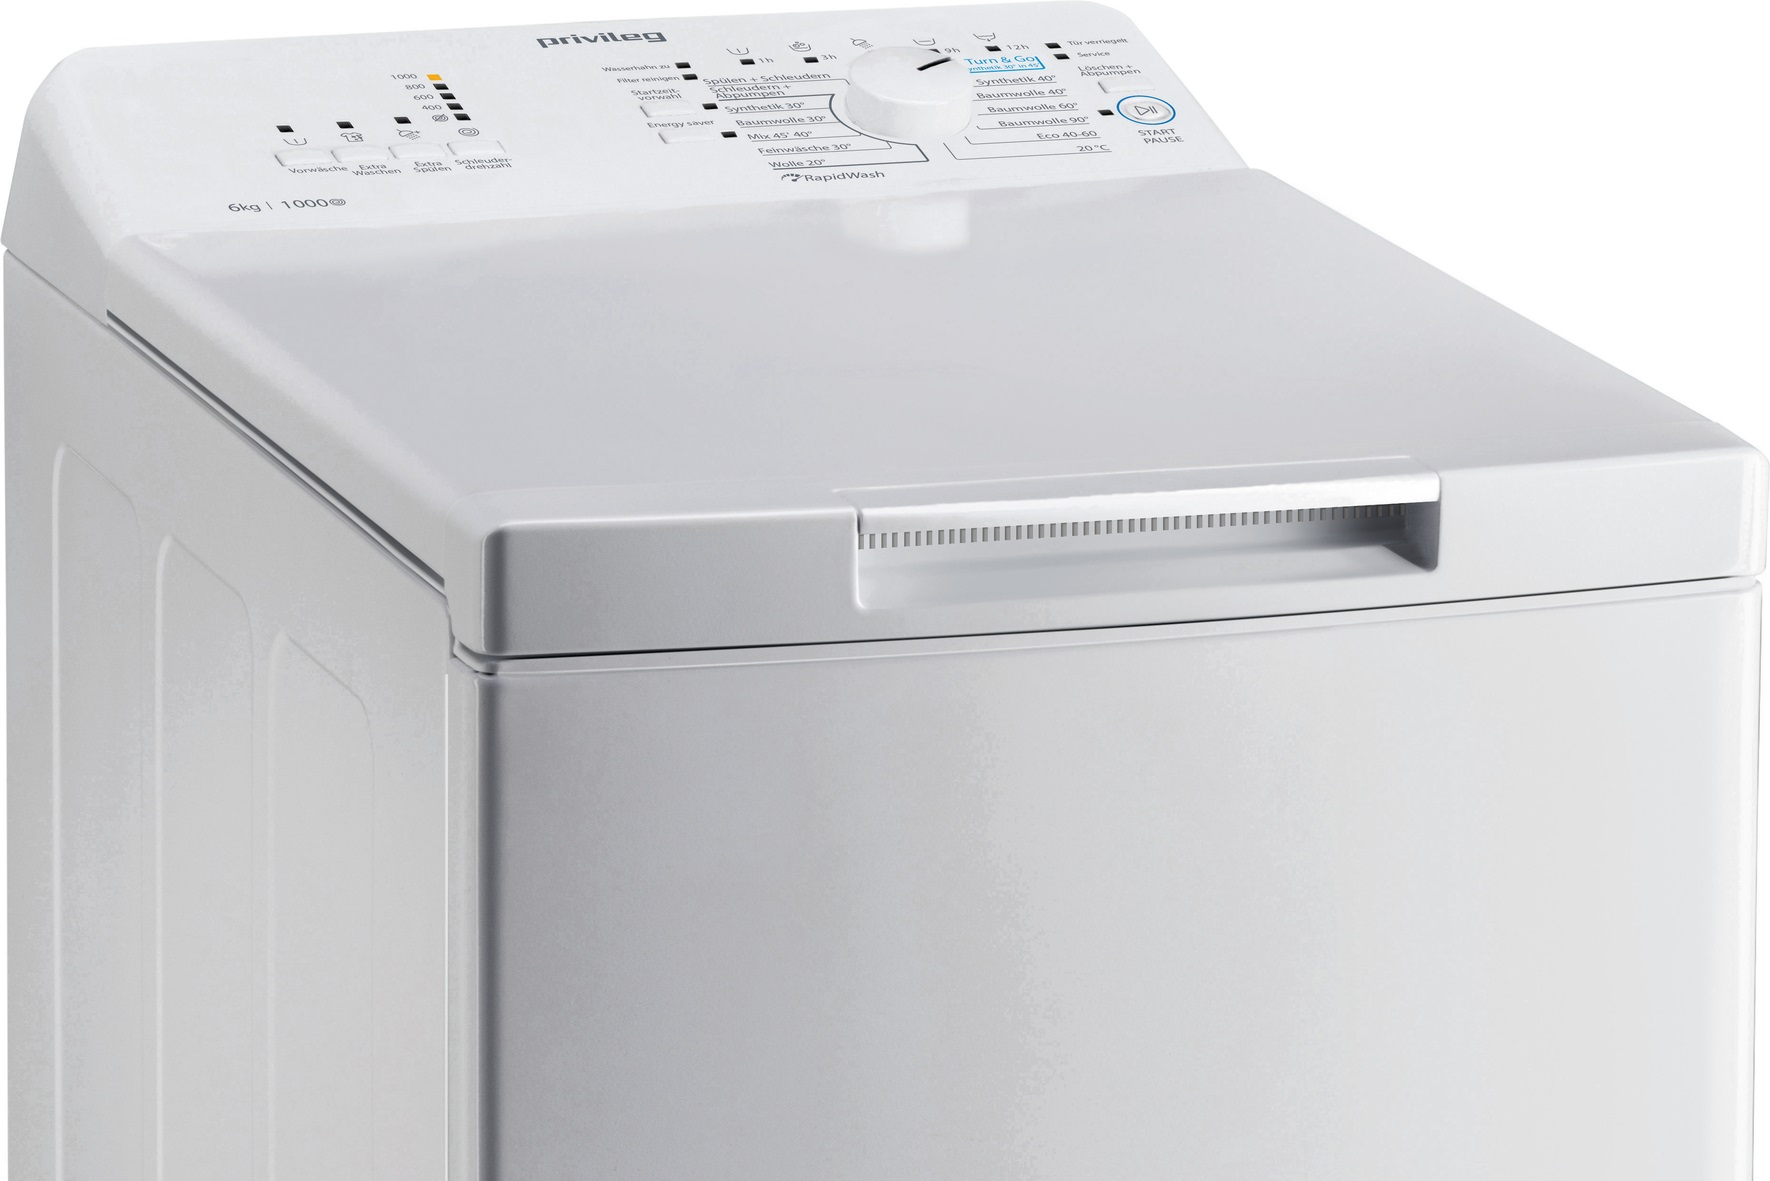 951 PRIVILEG L60300 D) (6 U/Min., DE/N kg, PWT Waschmaschine